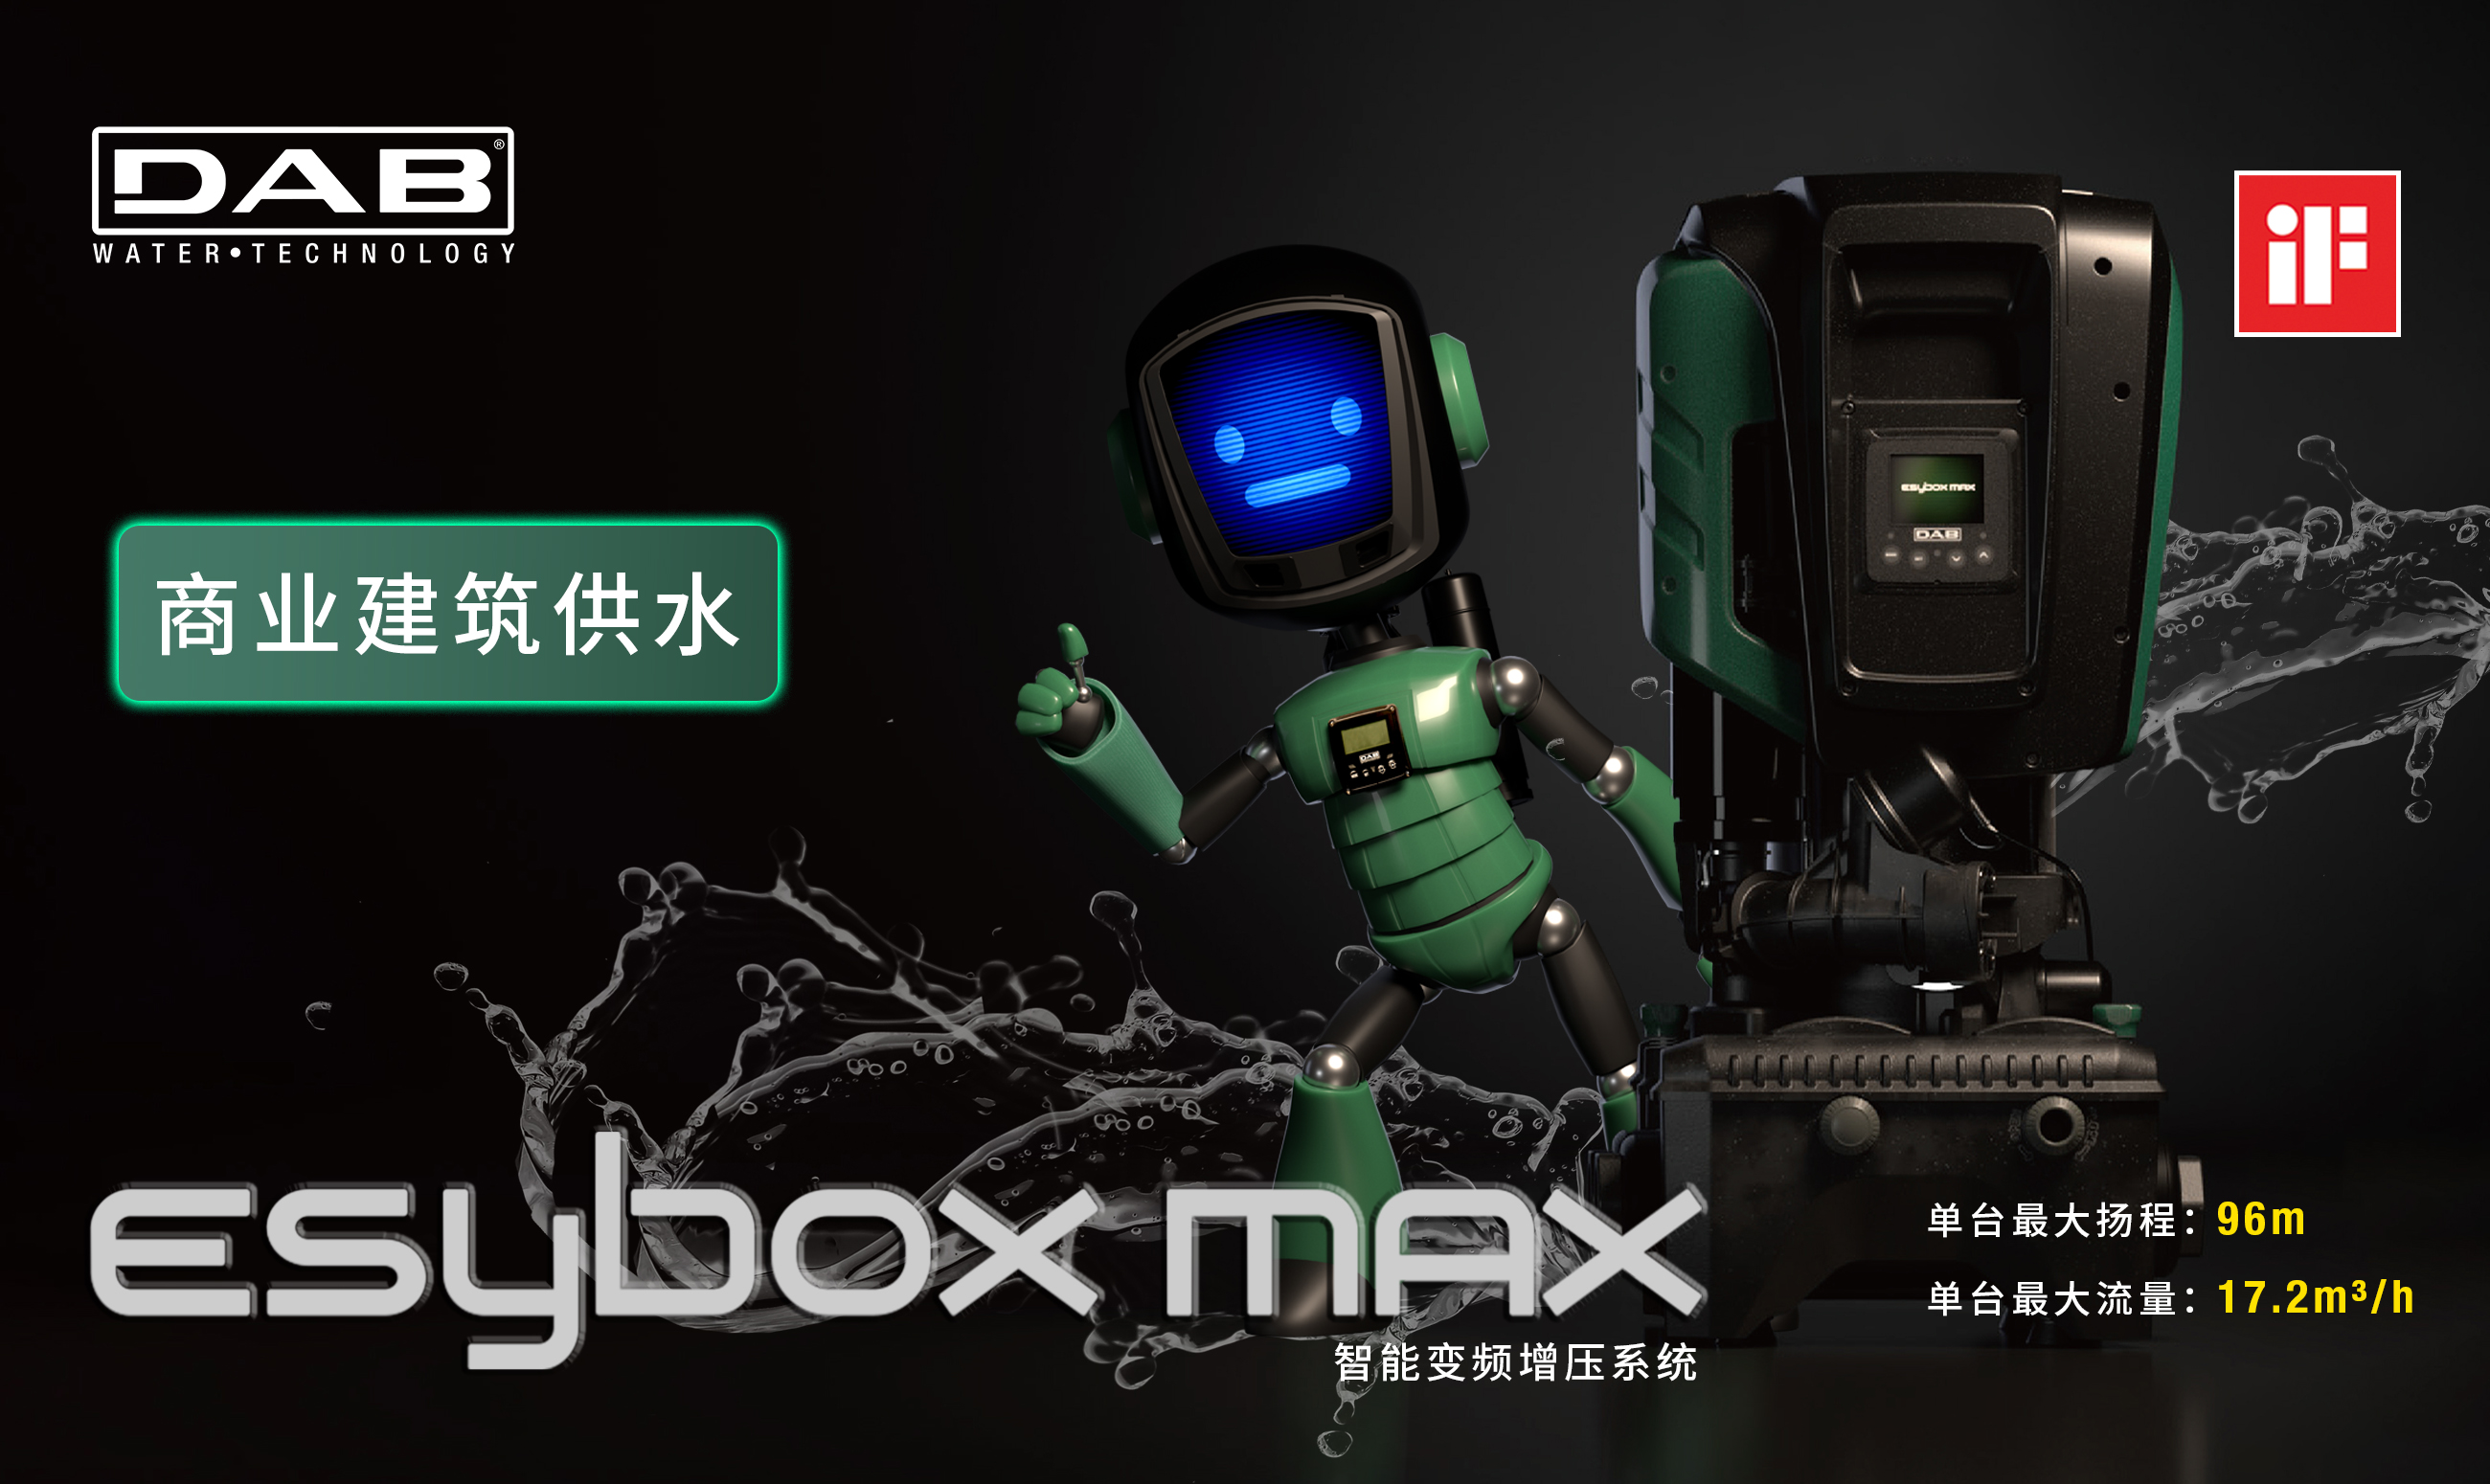 ESYBOX MAX 宣传海报2600x1600.jpg